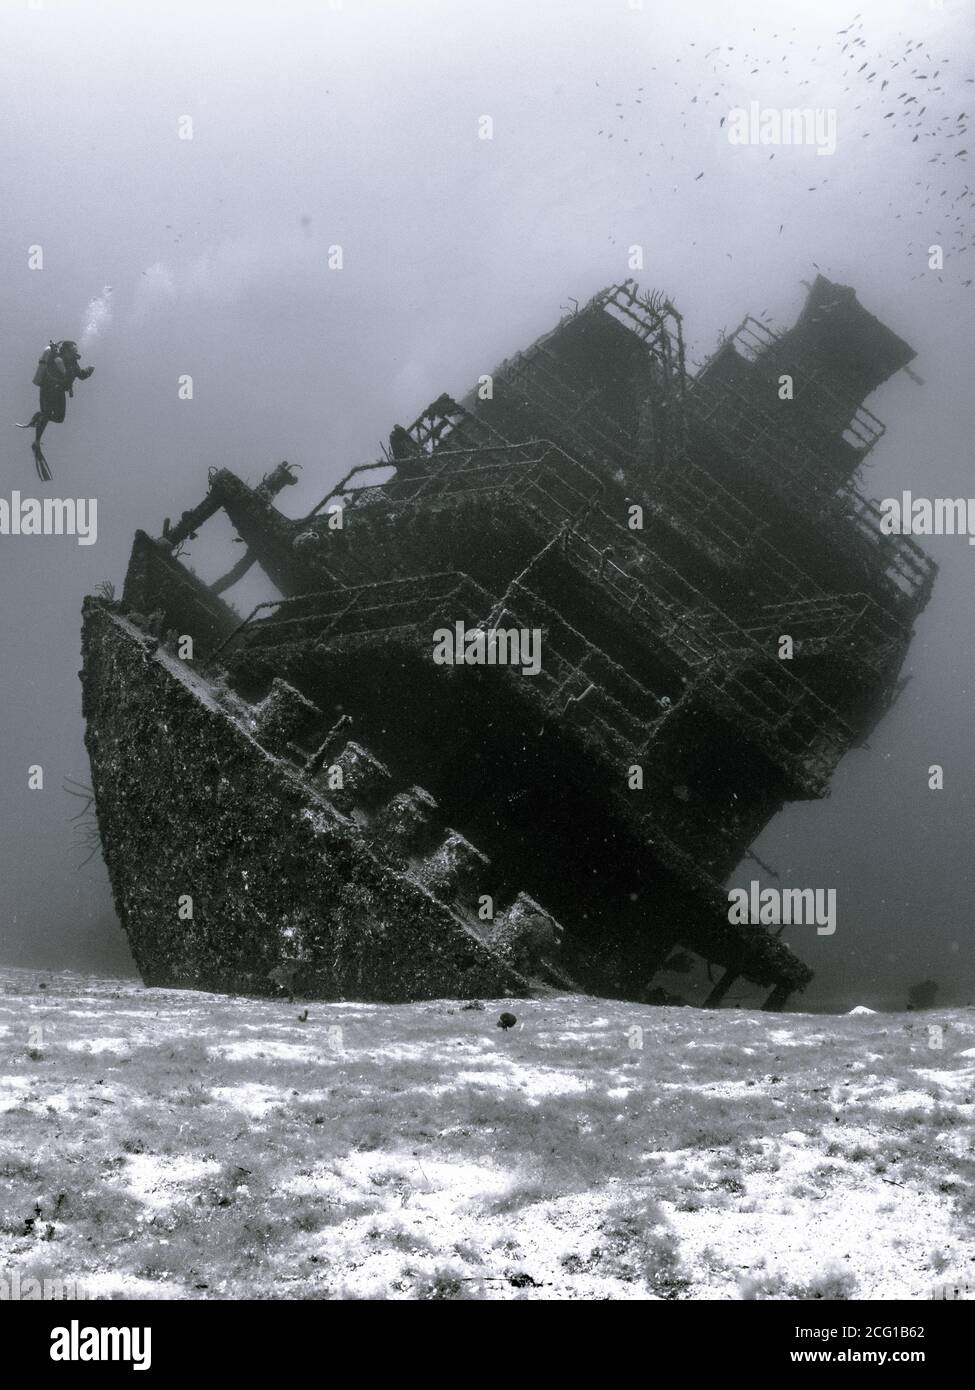 Scuba diver underwater with shipwreck  Stock Photo